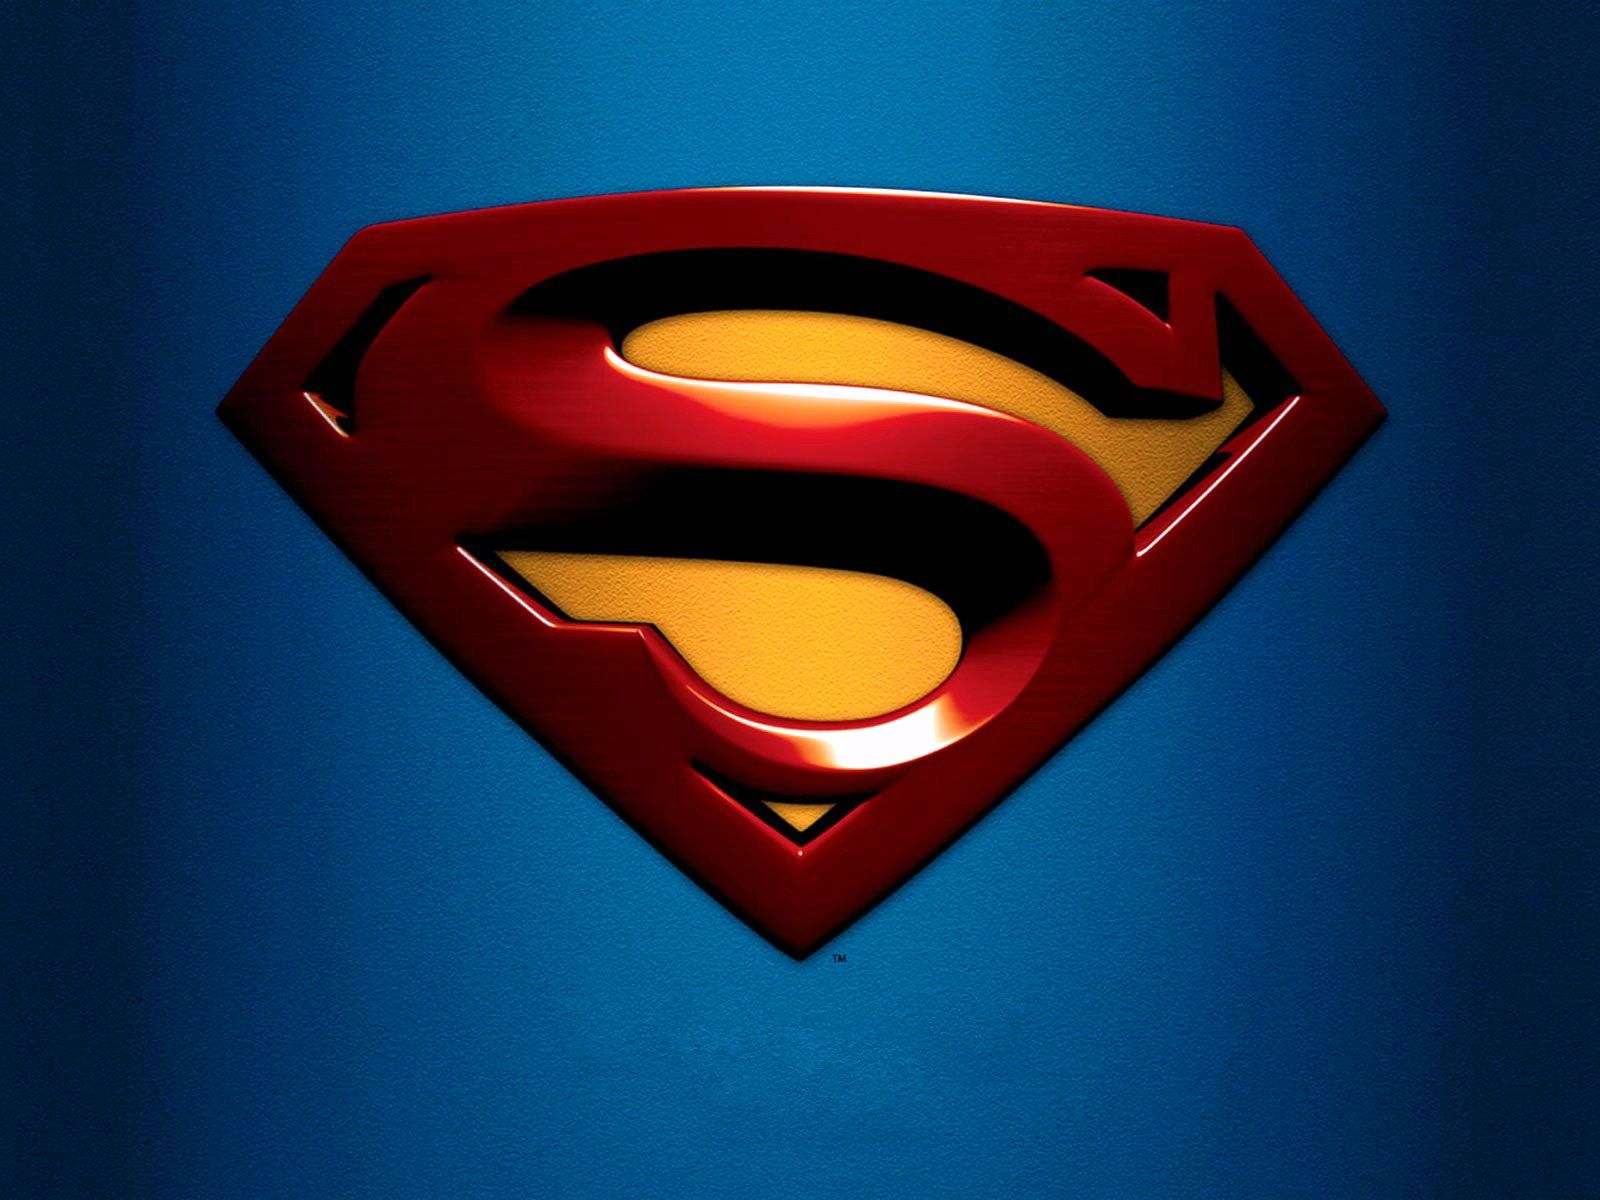 4K Man Of Steel Superman Wallpaper, HD Superheroes 4K Wallpapers, Images  and Background - Wallpapers Den